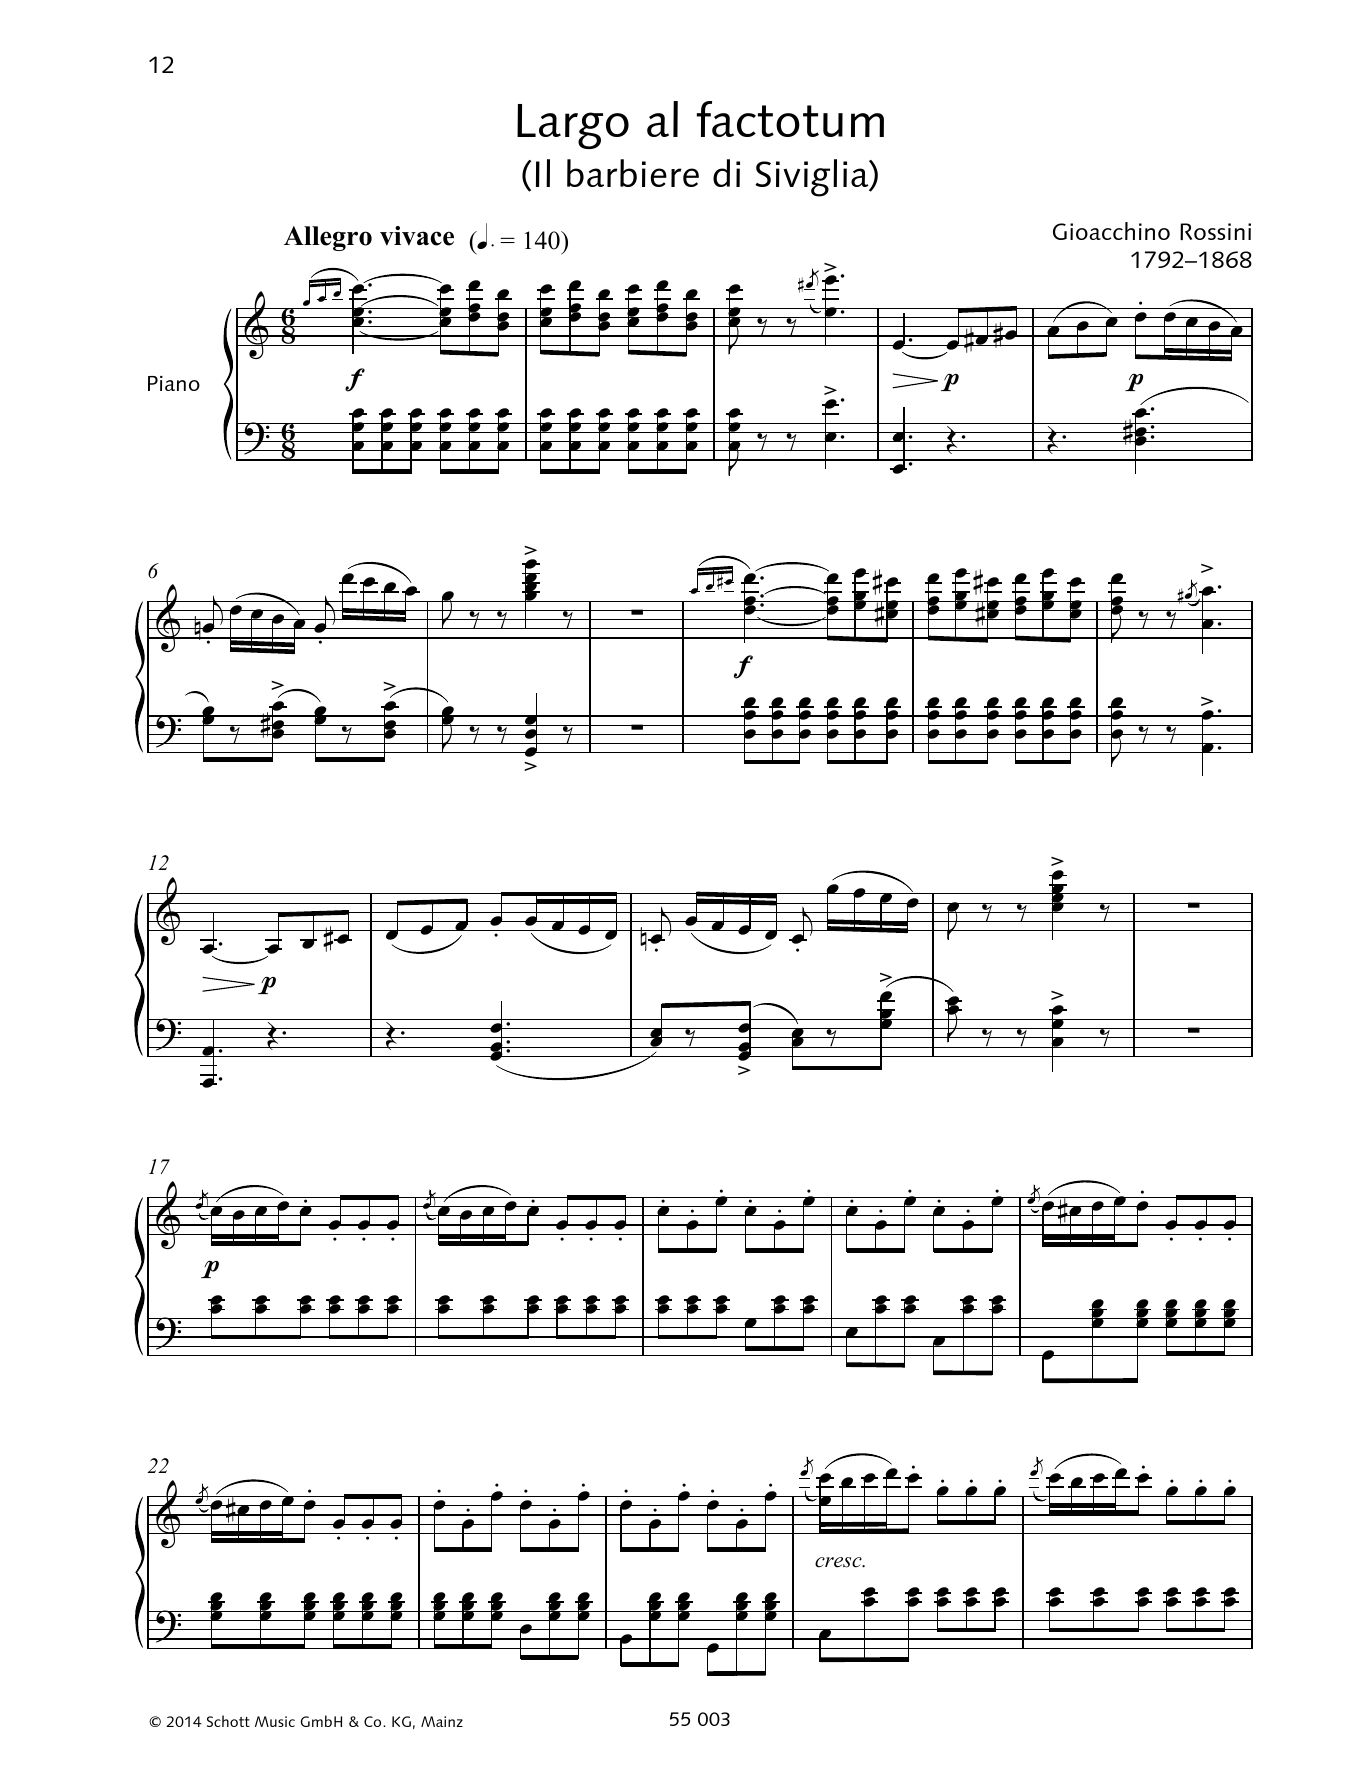 Francesca Licciarda Largo al factotum Sheet Music Notes & Chords for Piano & Vocal - Download or Print PDF